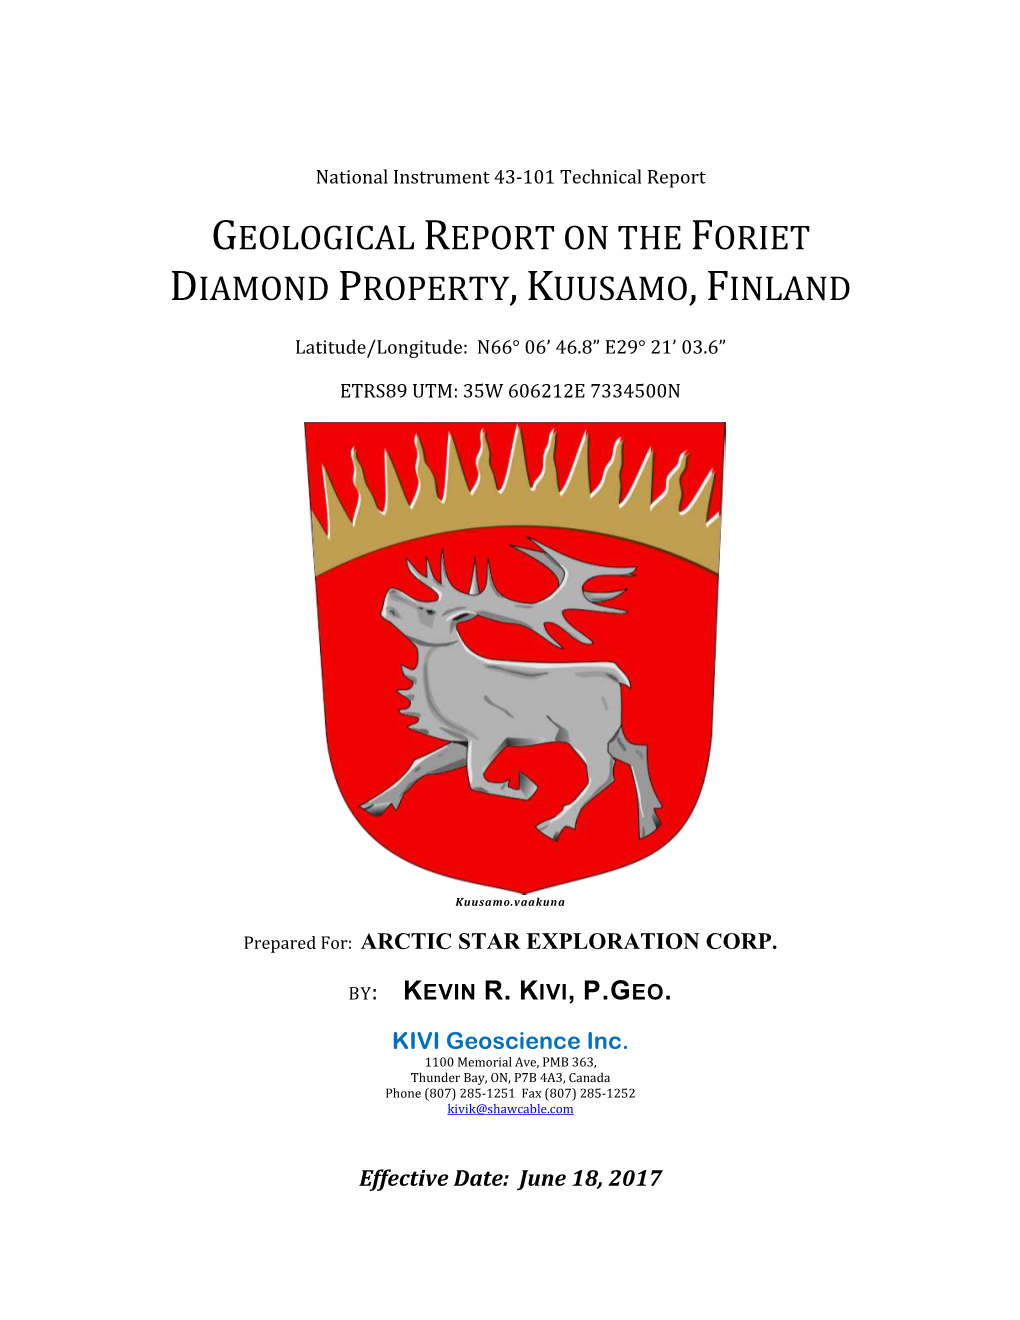 Geological Report on the Foriet Diamond Property, Kuusamo, Finland